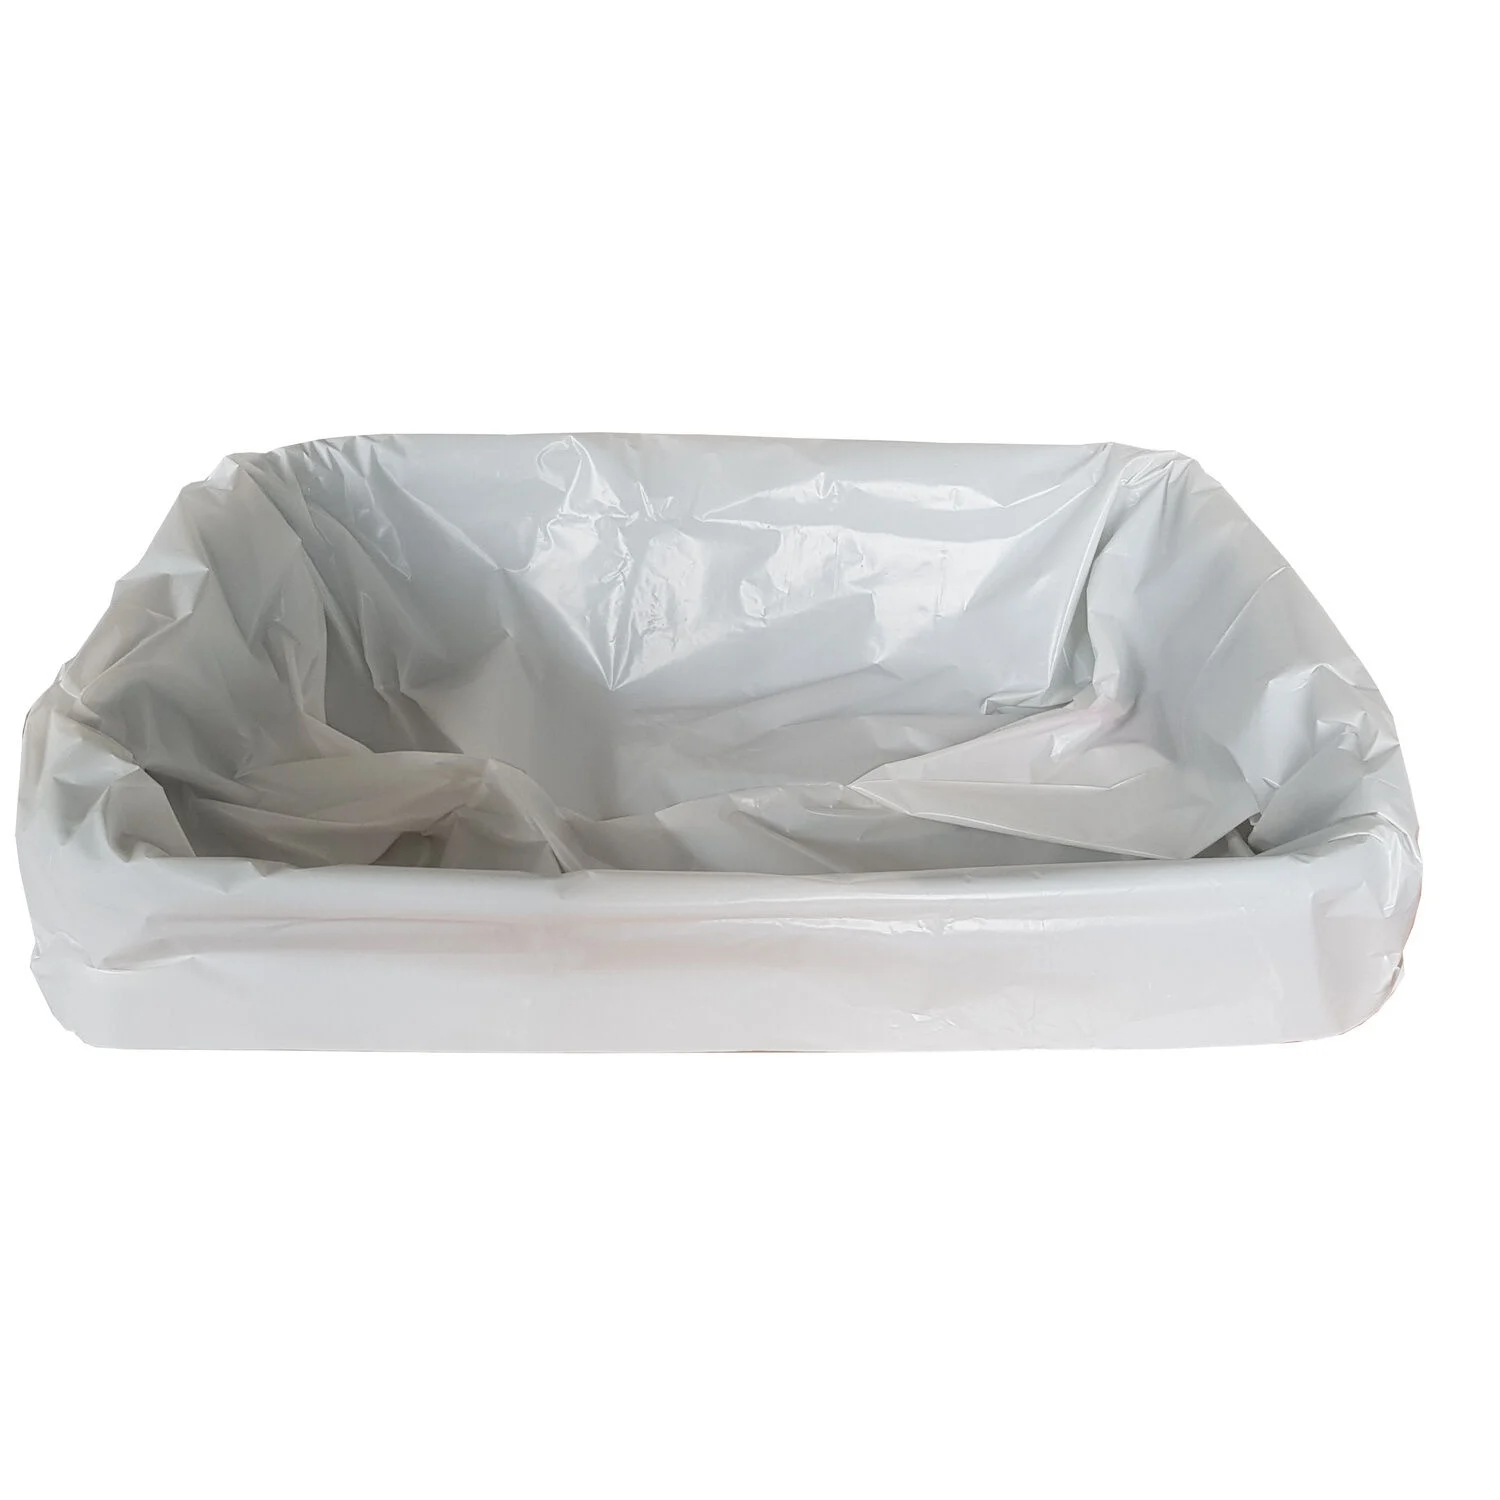 12 Gm Bags For Litter Box - AimÉ